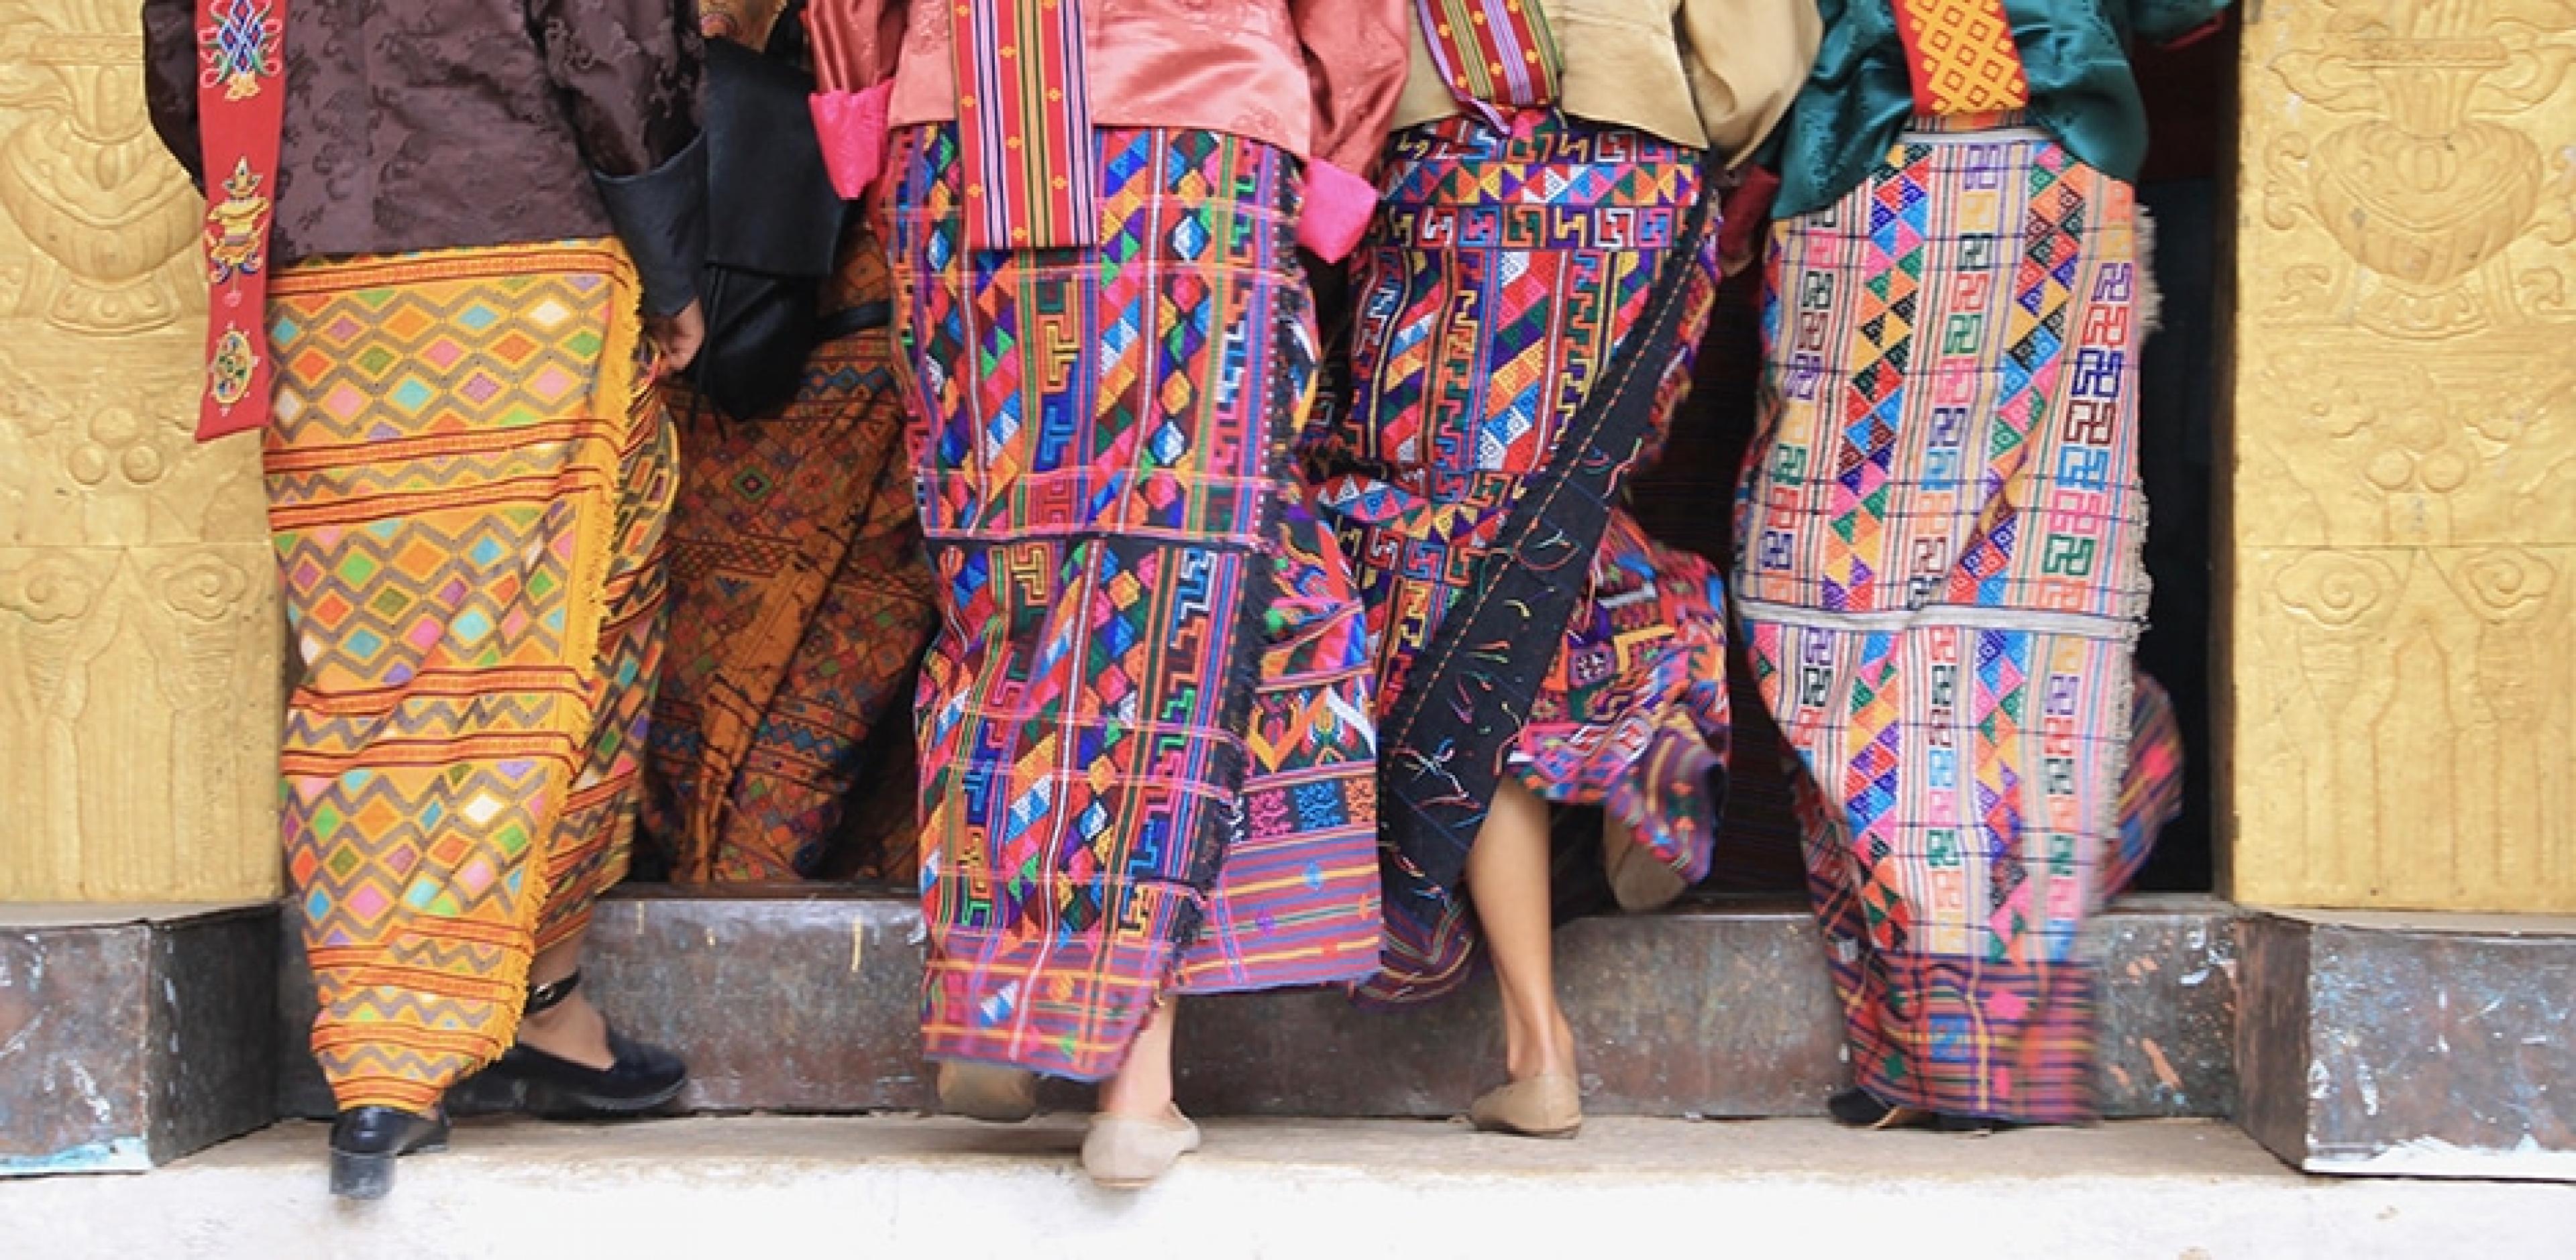 women in bhutan wearing colorful skirts